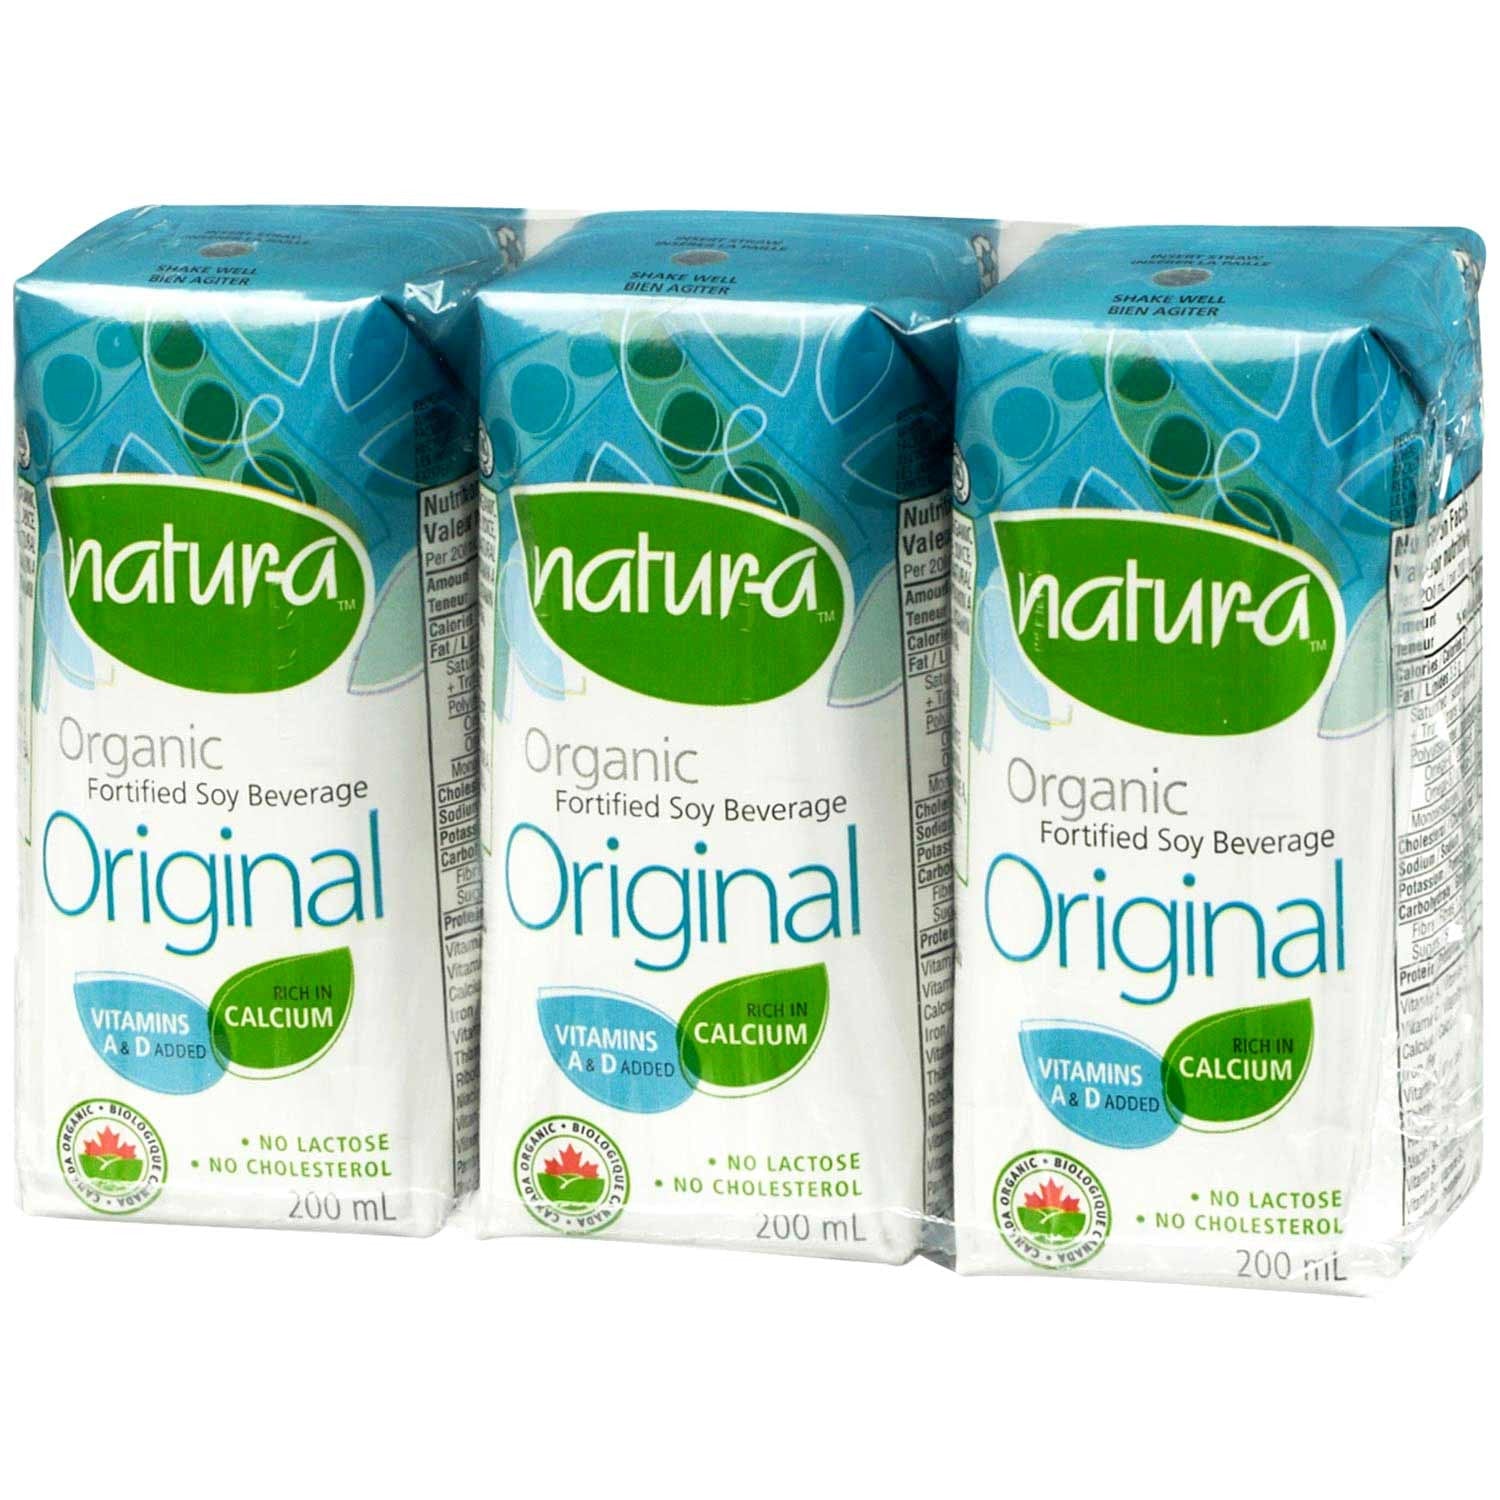 Natur-a Enriched Soy Beverage - Original (Organic), 200 ml.-NaturesWisdom